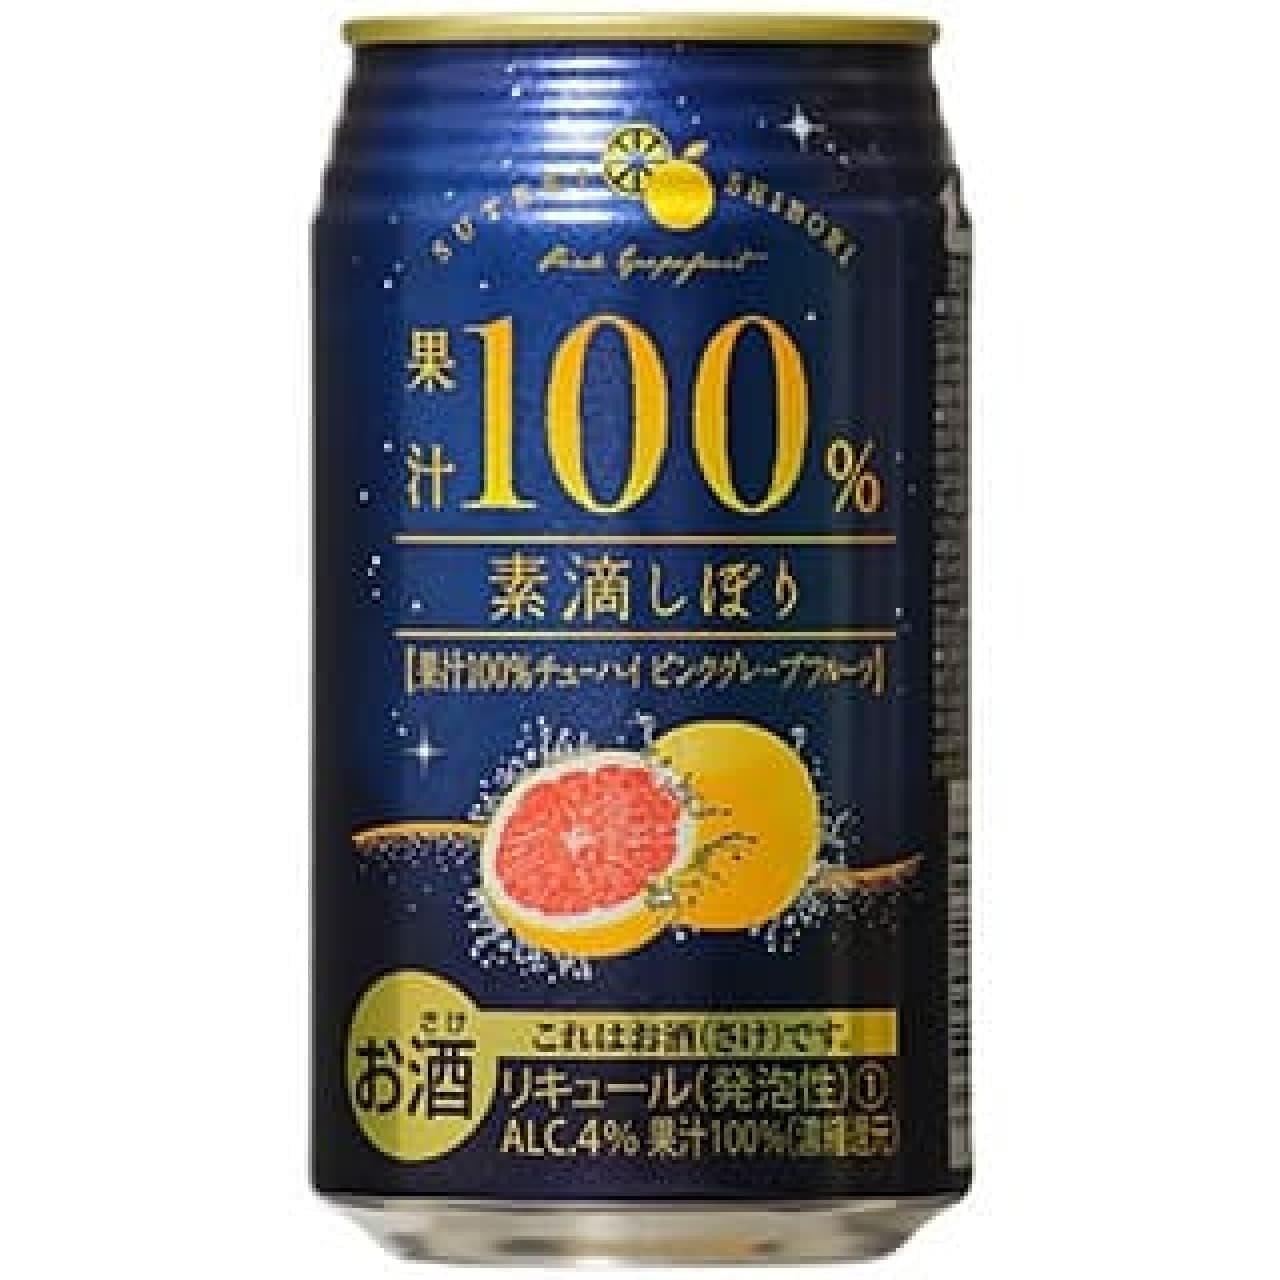 7-ELEVEN "100% Juice Squeezed Juice Chuhai Pink Grapefruit 350ml Can"